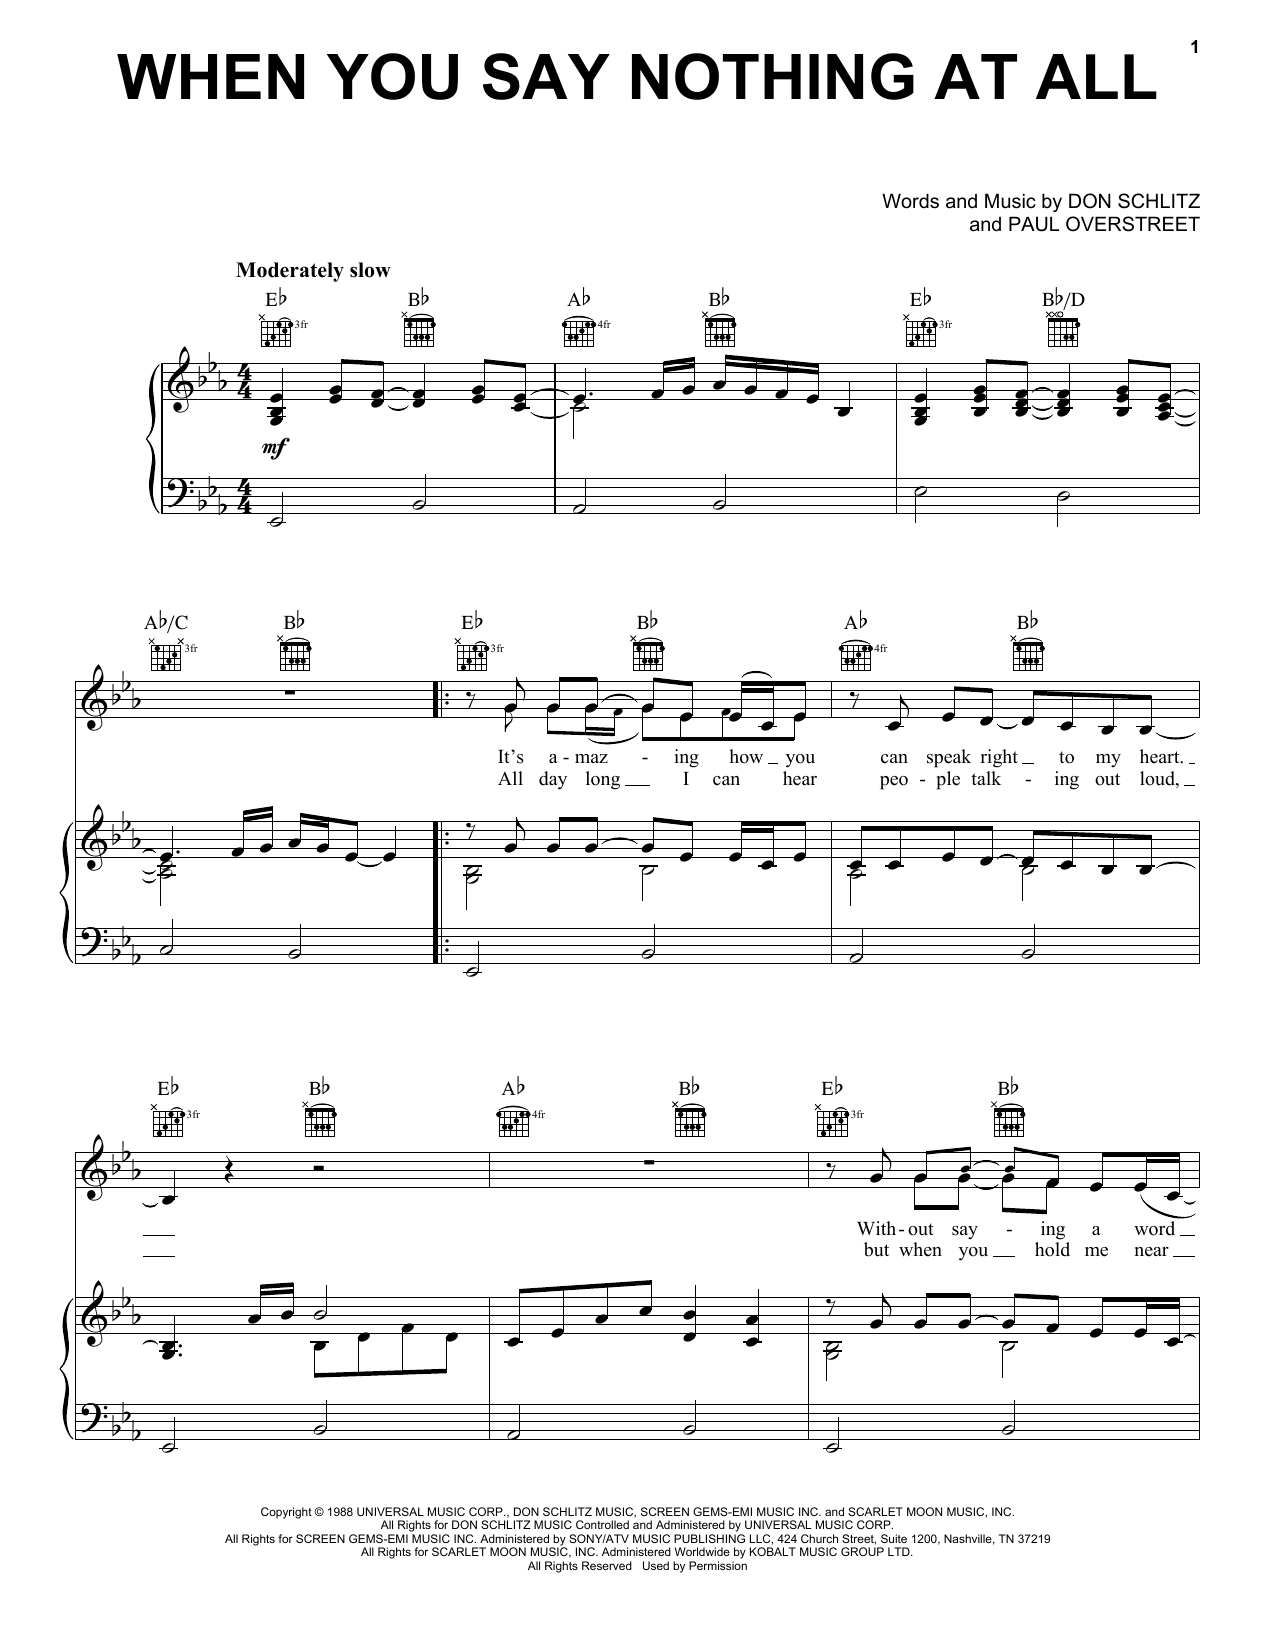 Ronan Keating When You Say Nothing At All sheet music notes and chords. Download Printable PDF.